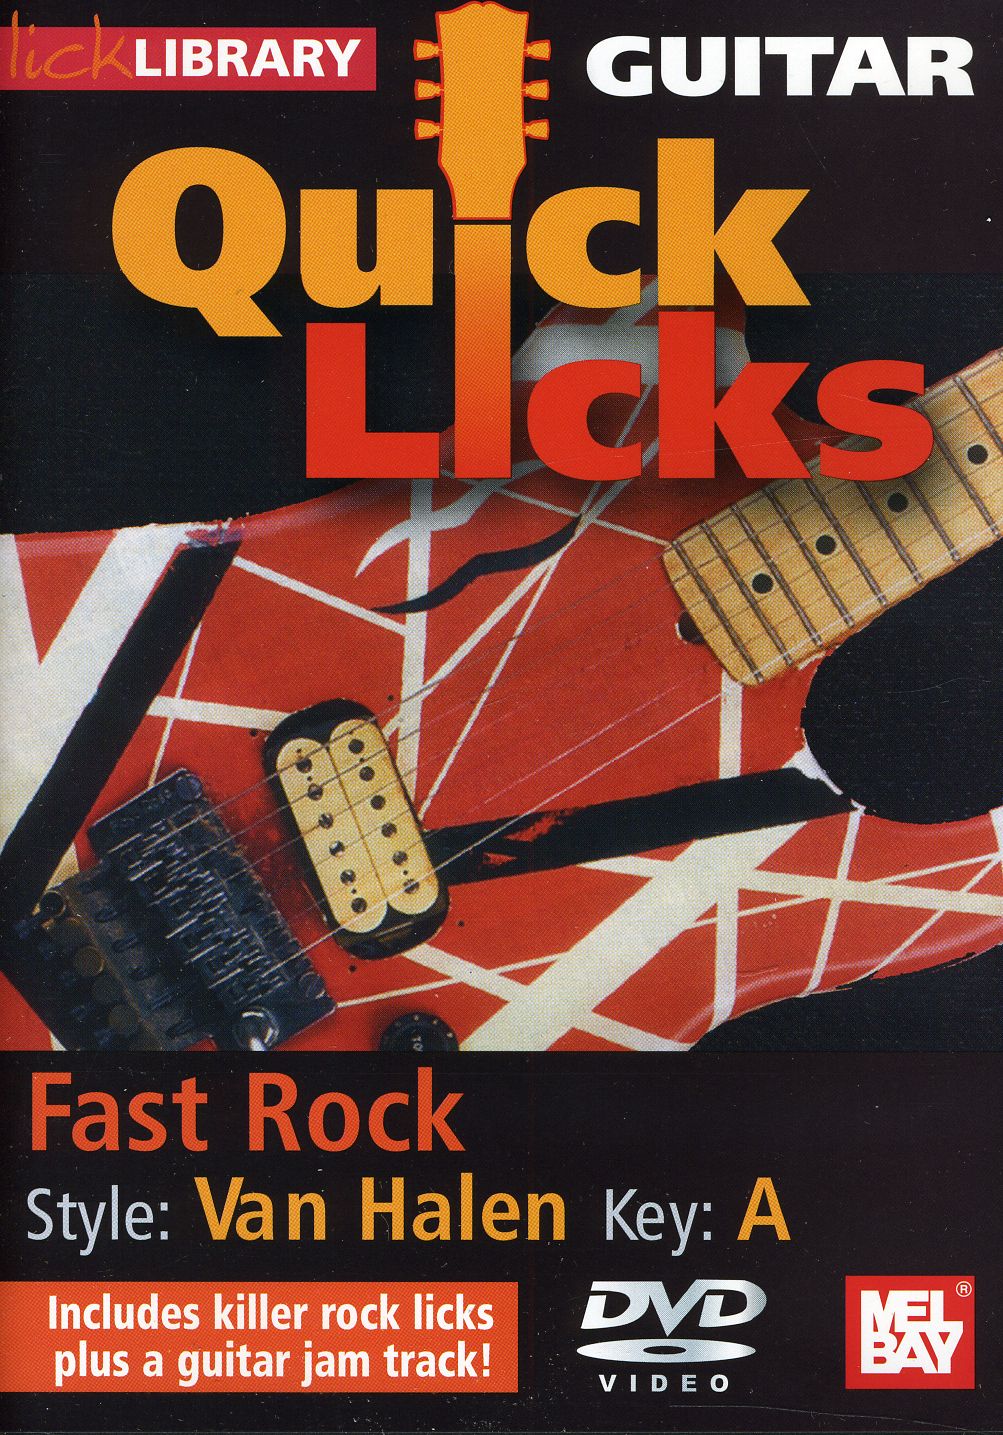 QUICK LICKS: EDDIE VAN HALEN FAST ROCK - KEY: A